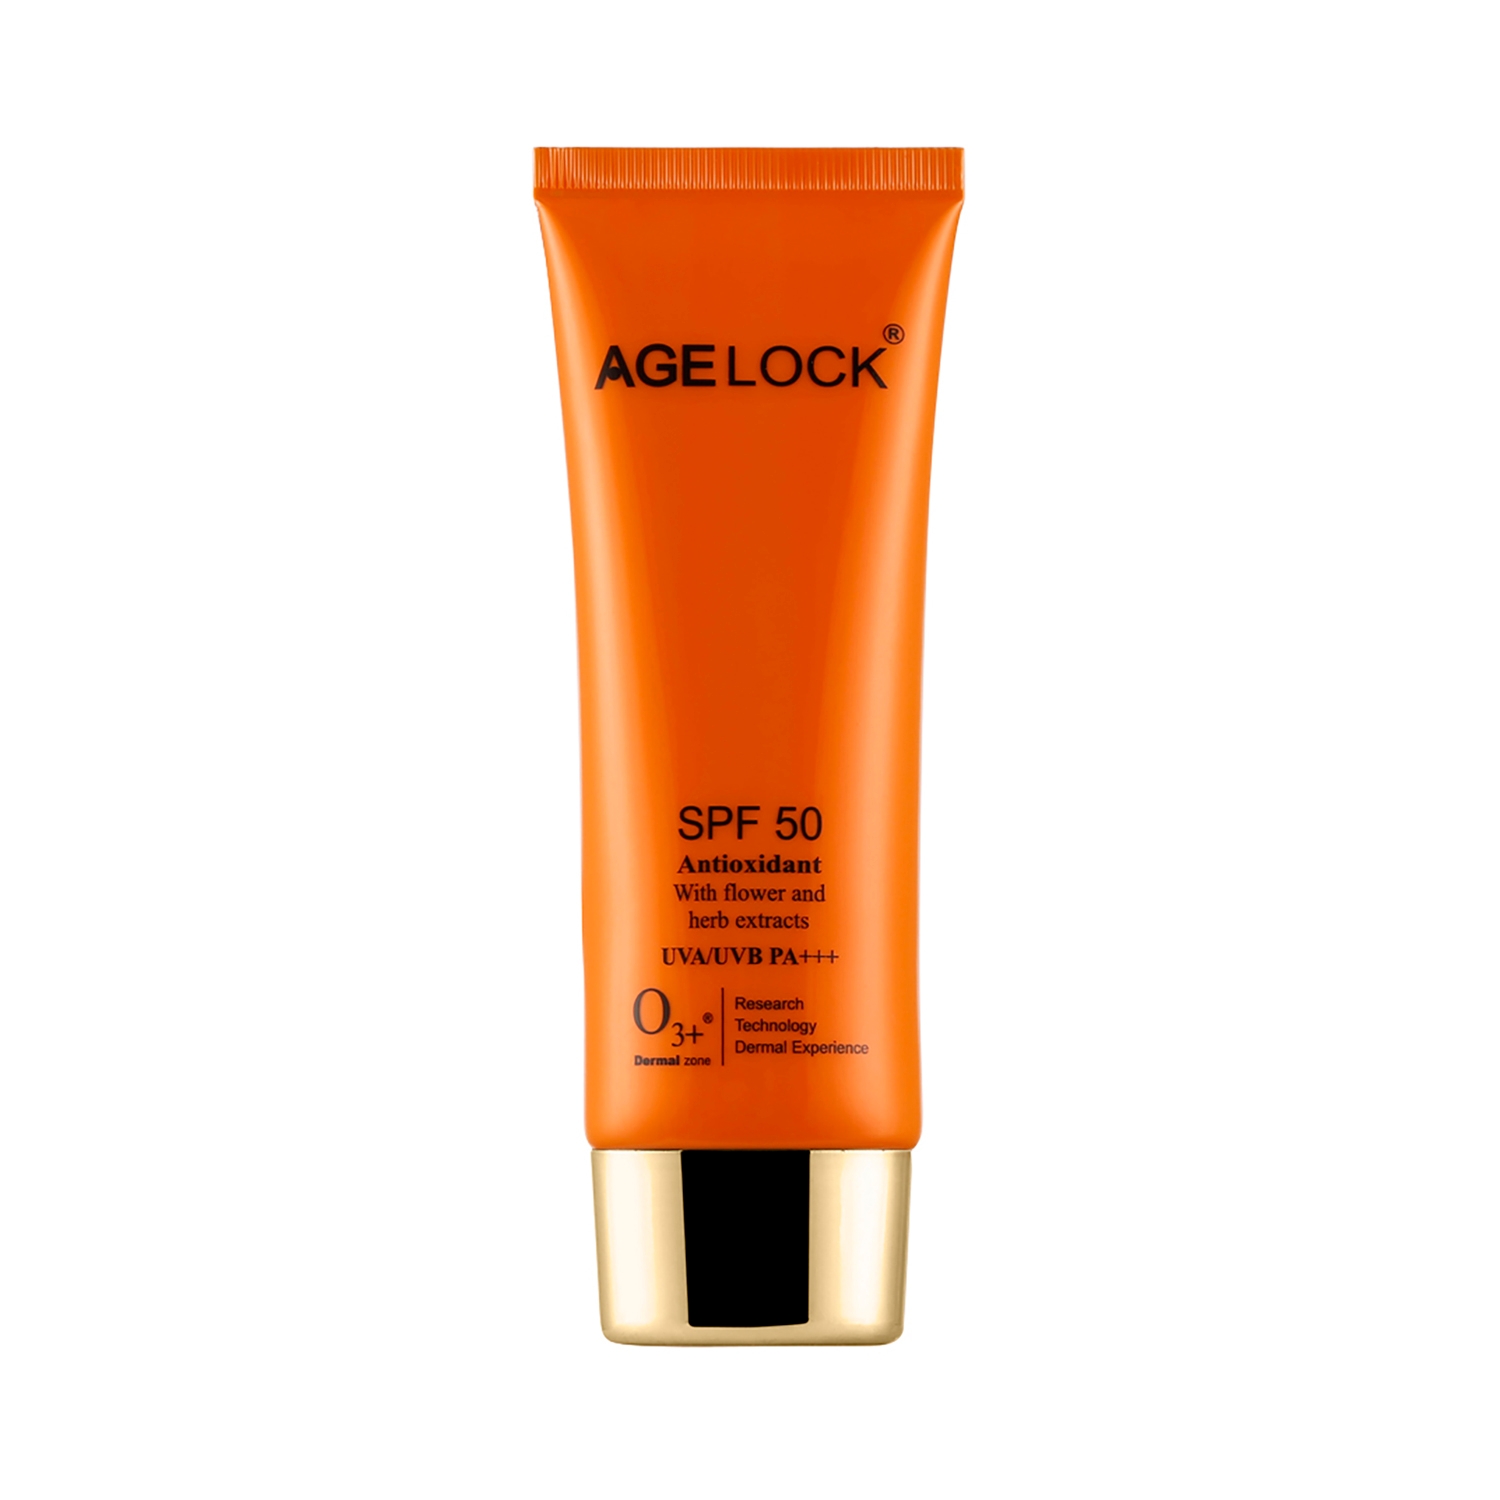 O3+ Age Lock Antioxidant Sunscreen SPF 50 PA+++ (75g)